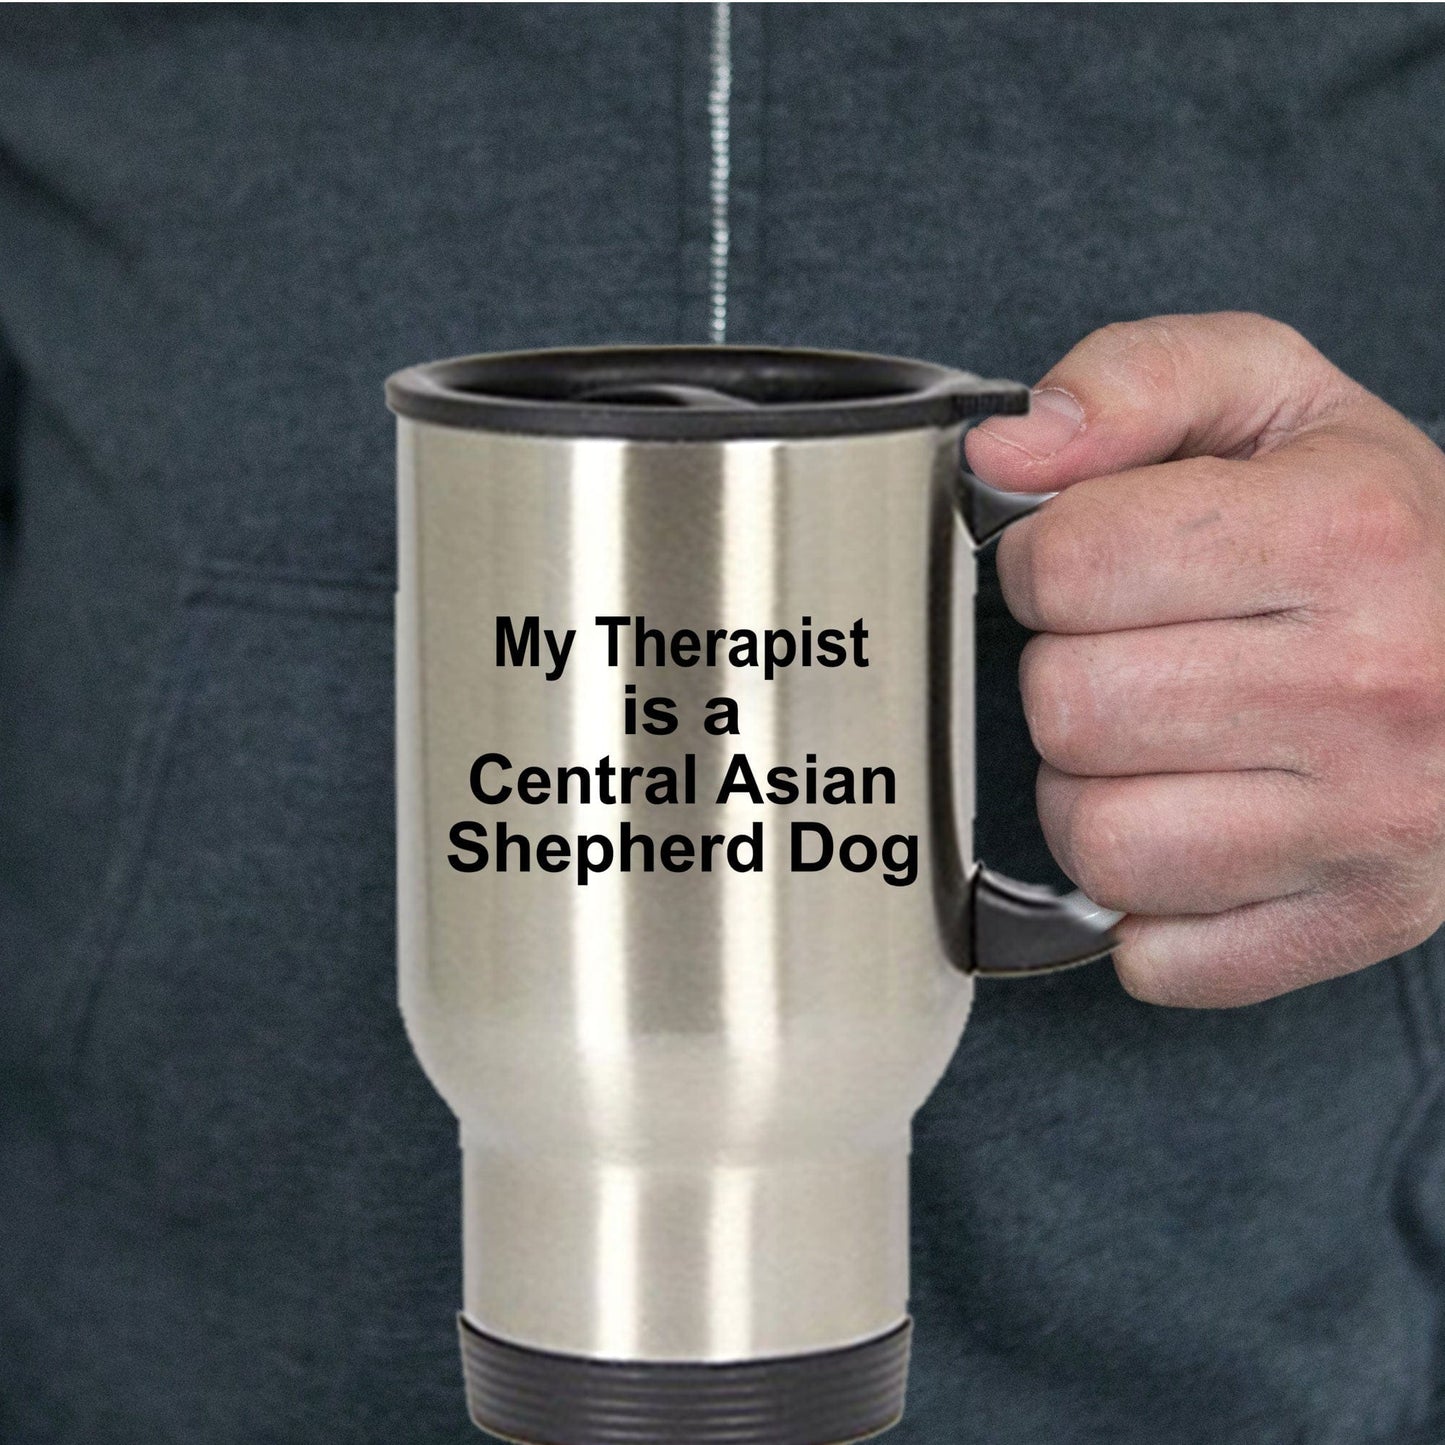 Central Asian Shepherd Dog Therapist Travel Coffee Mug